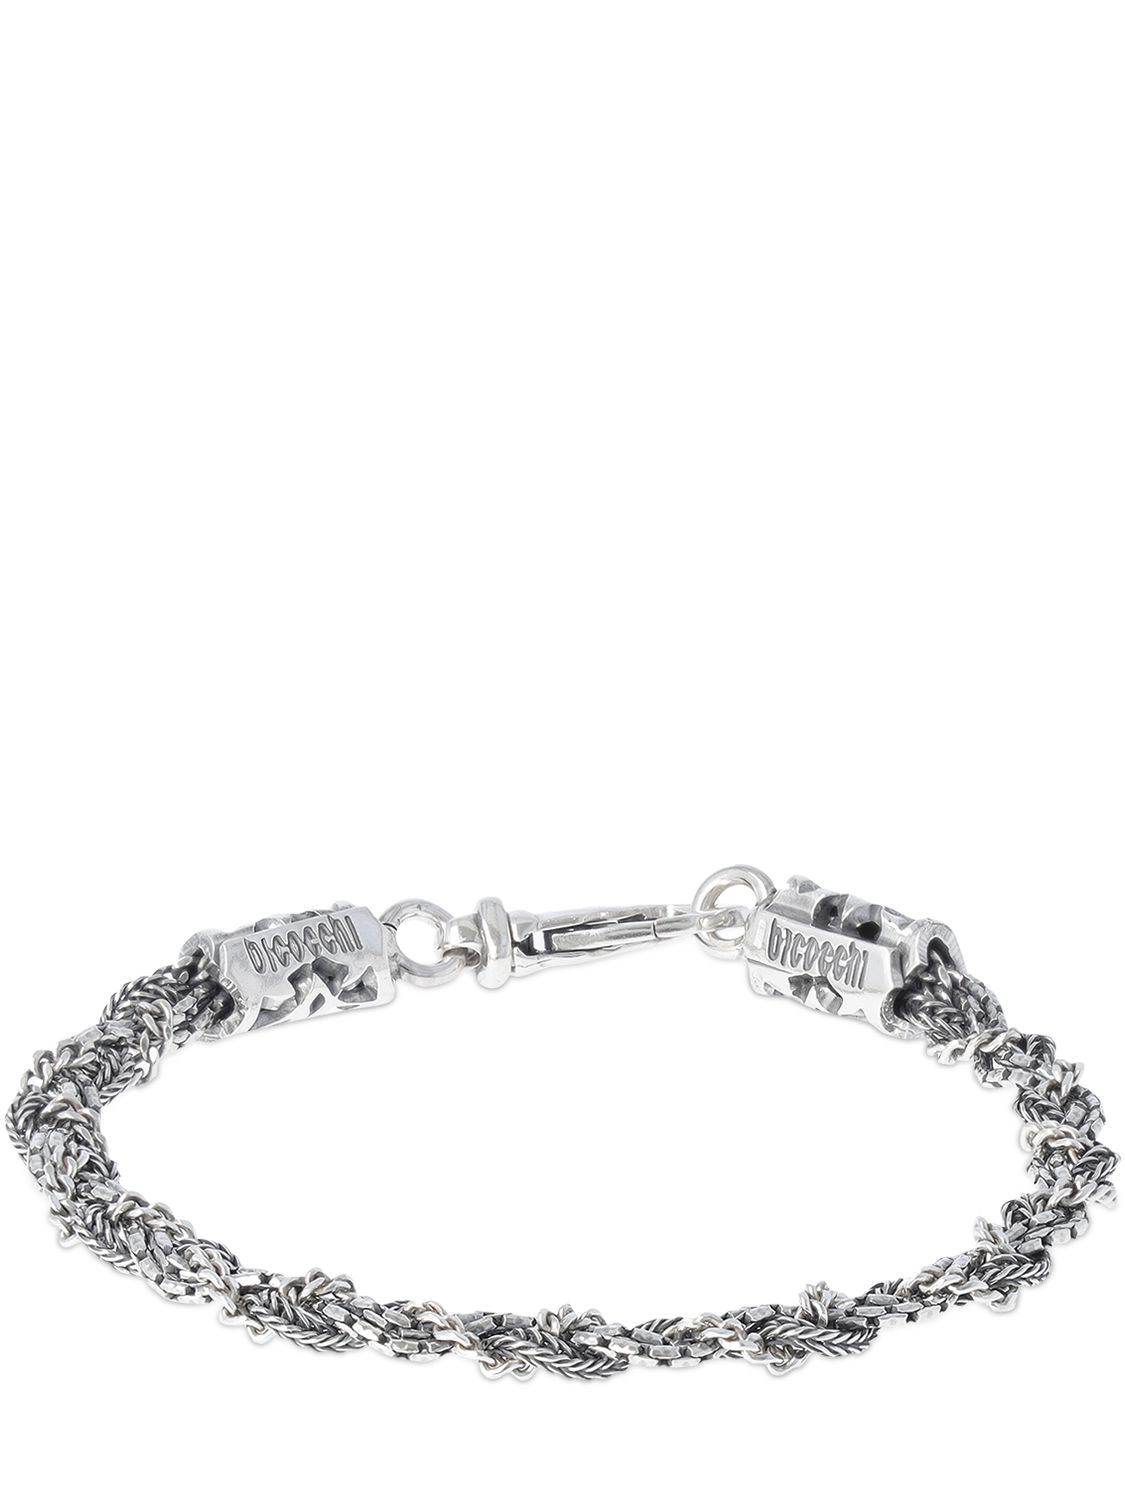 Engraved Braided Chain Bracelet